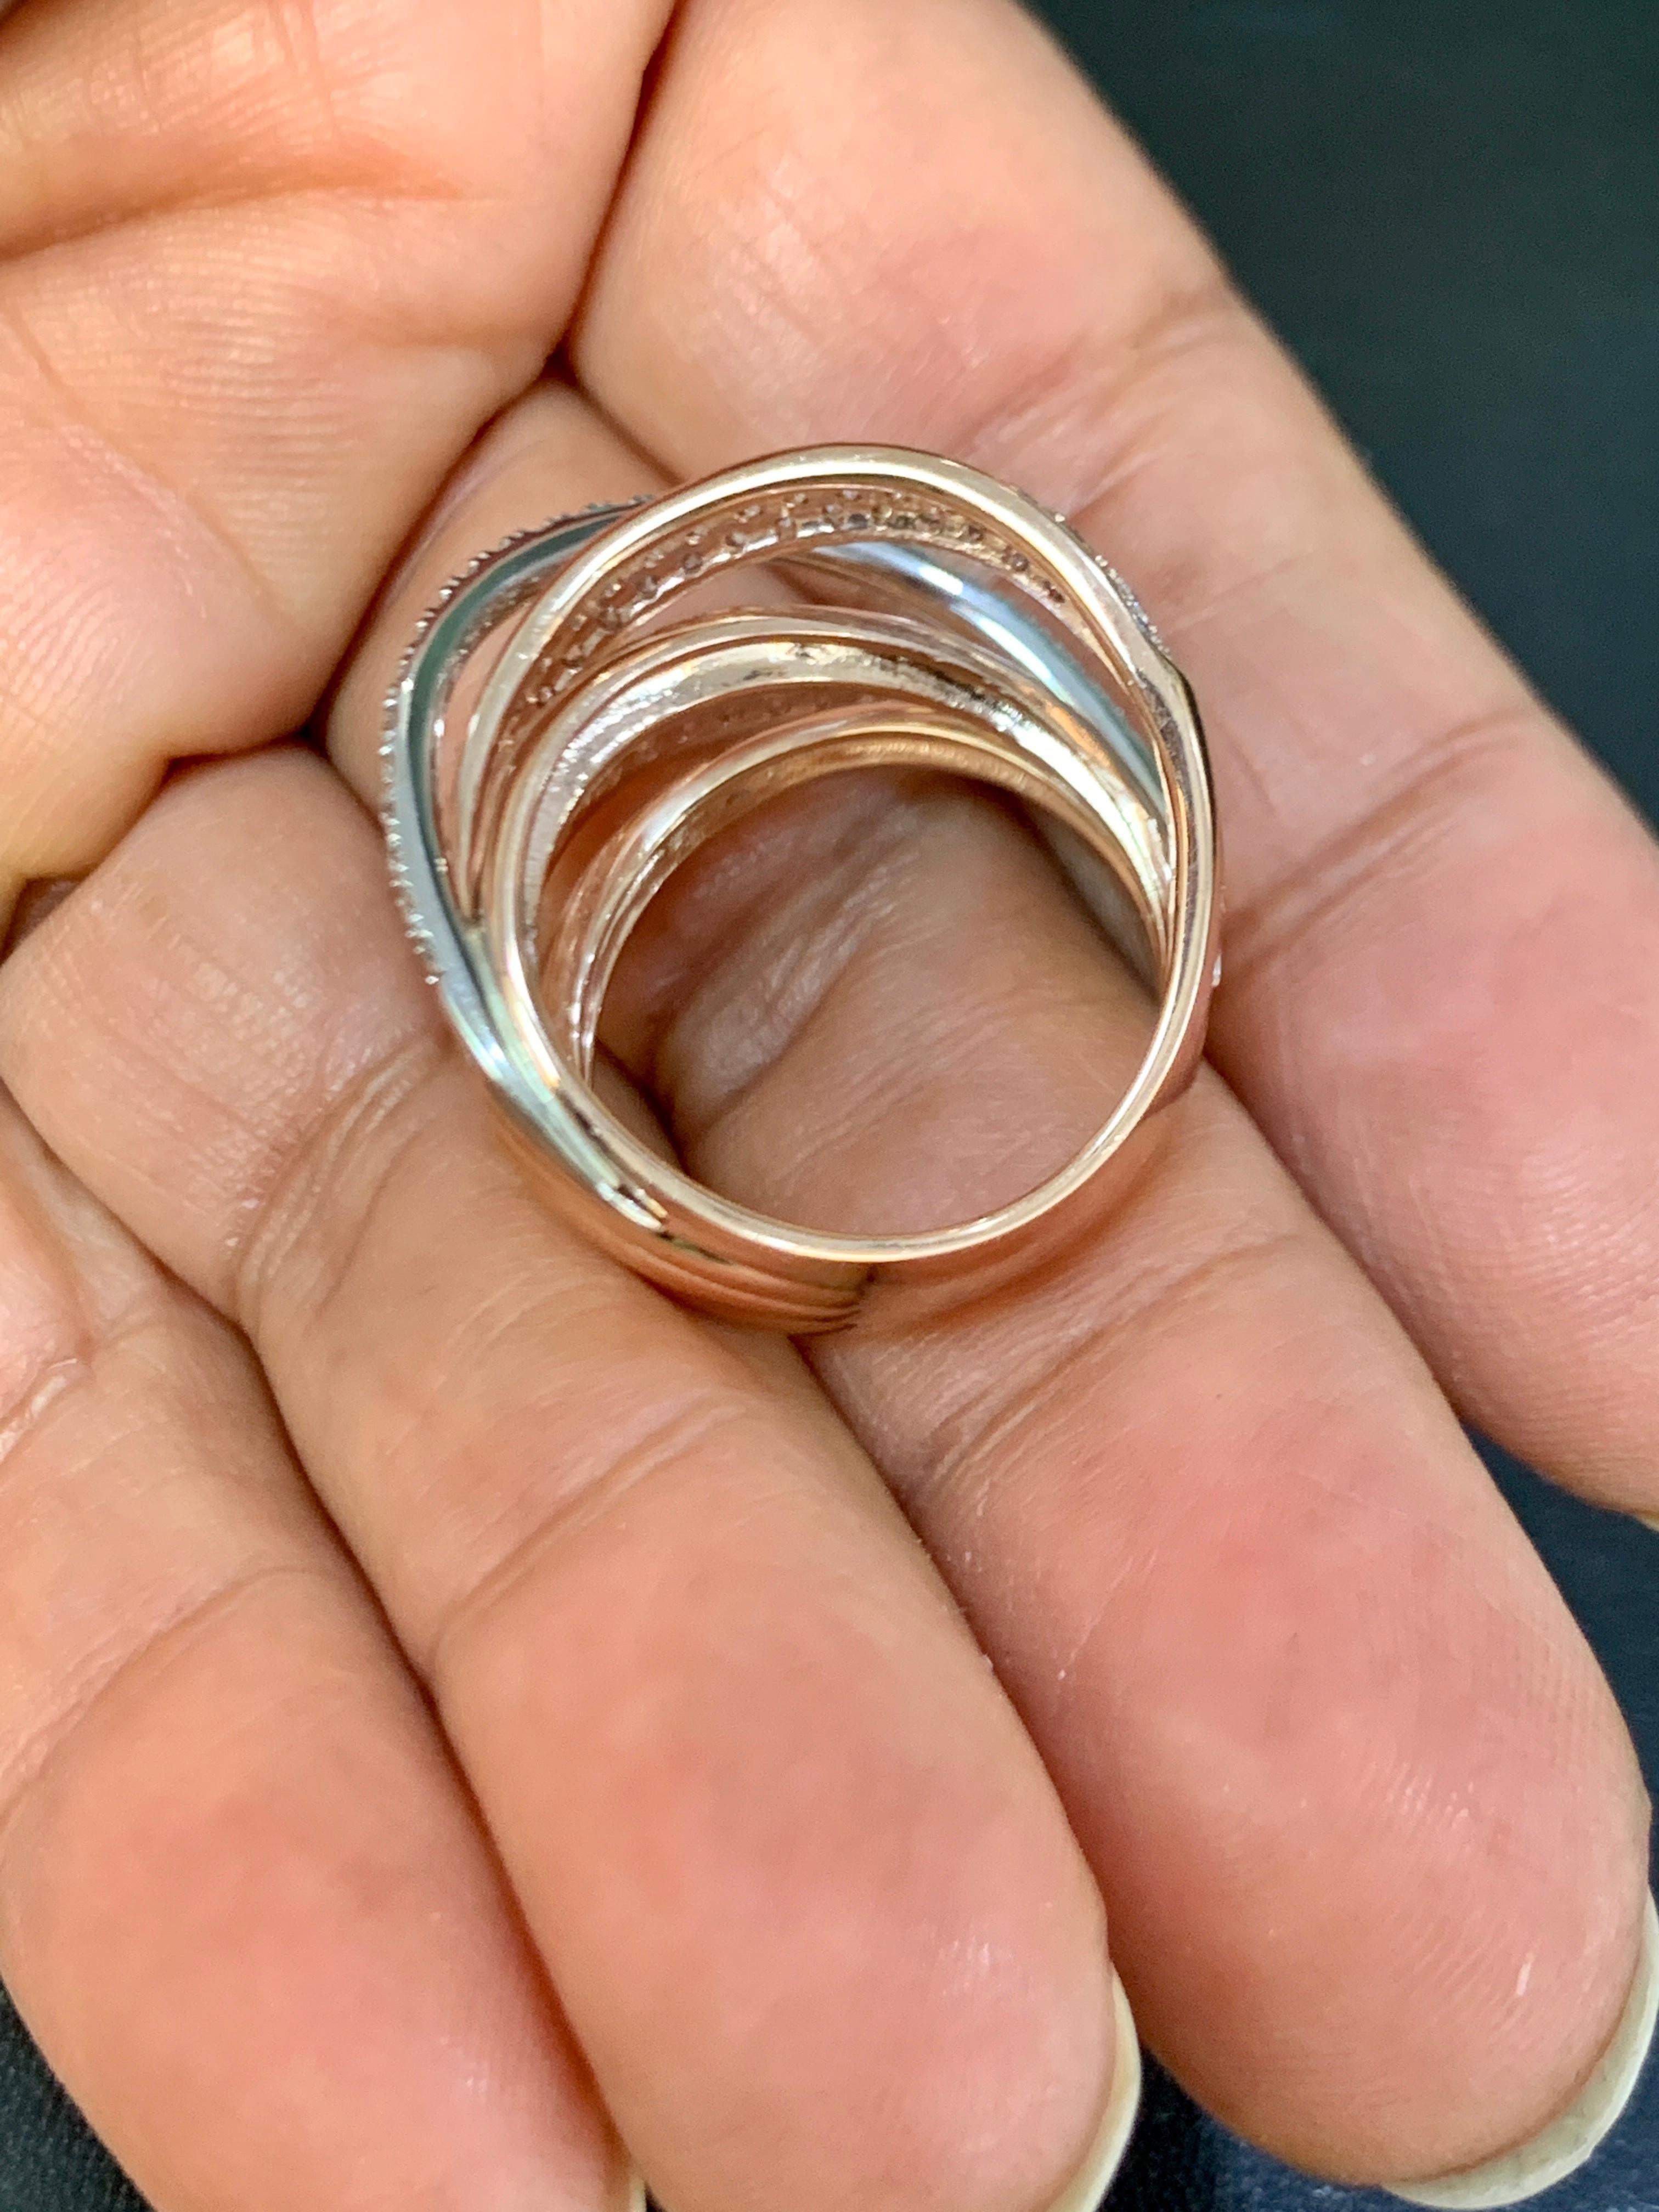 1.6 carat diamond ring